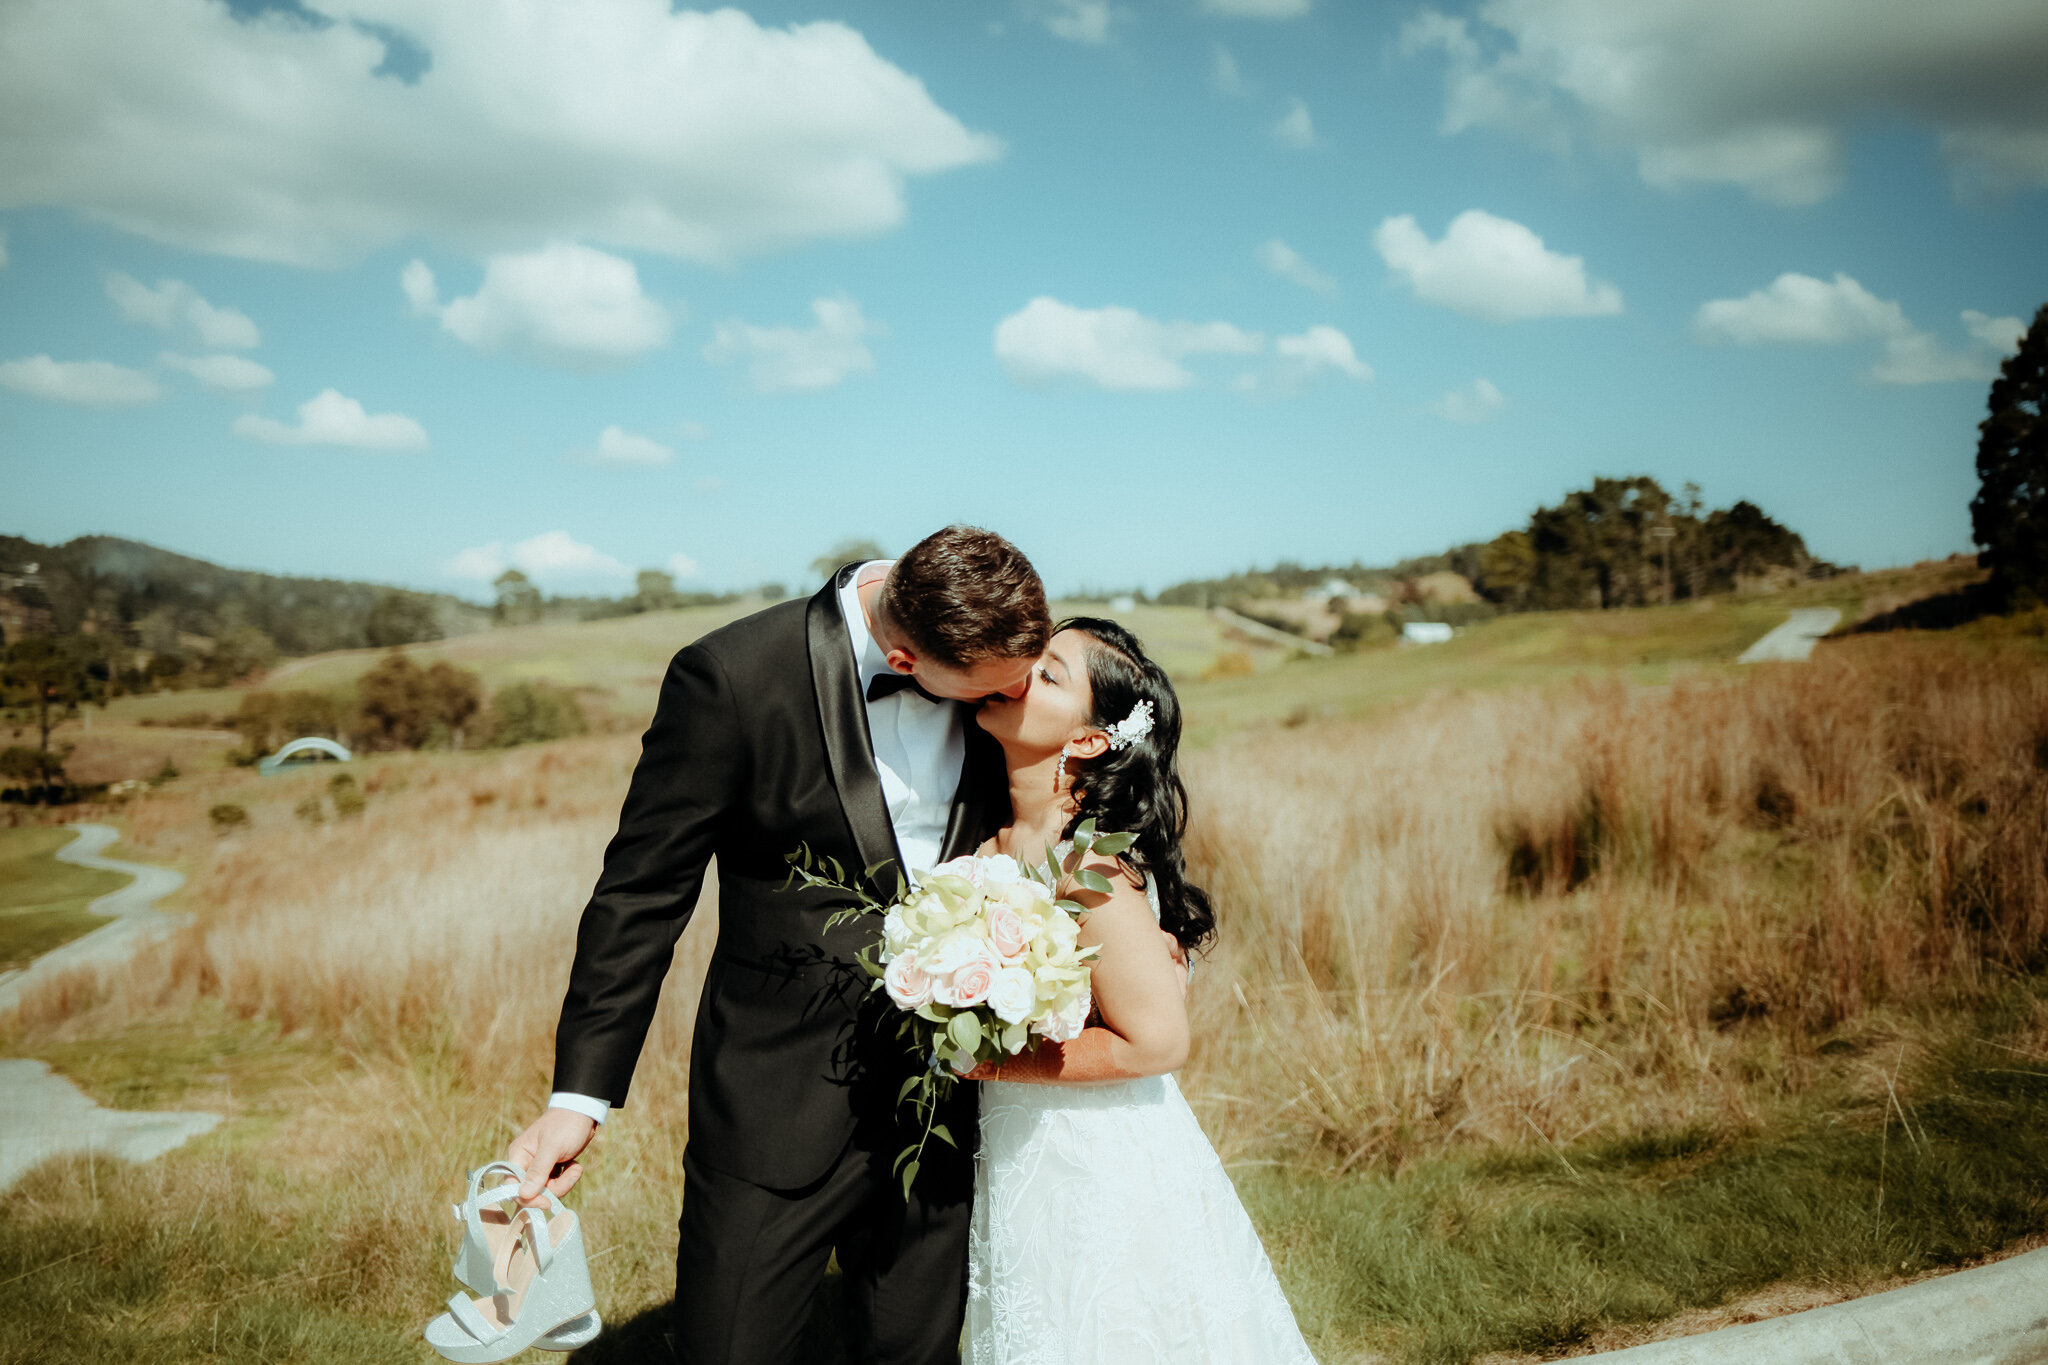 Auckland-wedding-photographer-The-Breakfast-Workshop-@annavasby  (60).jpg